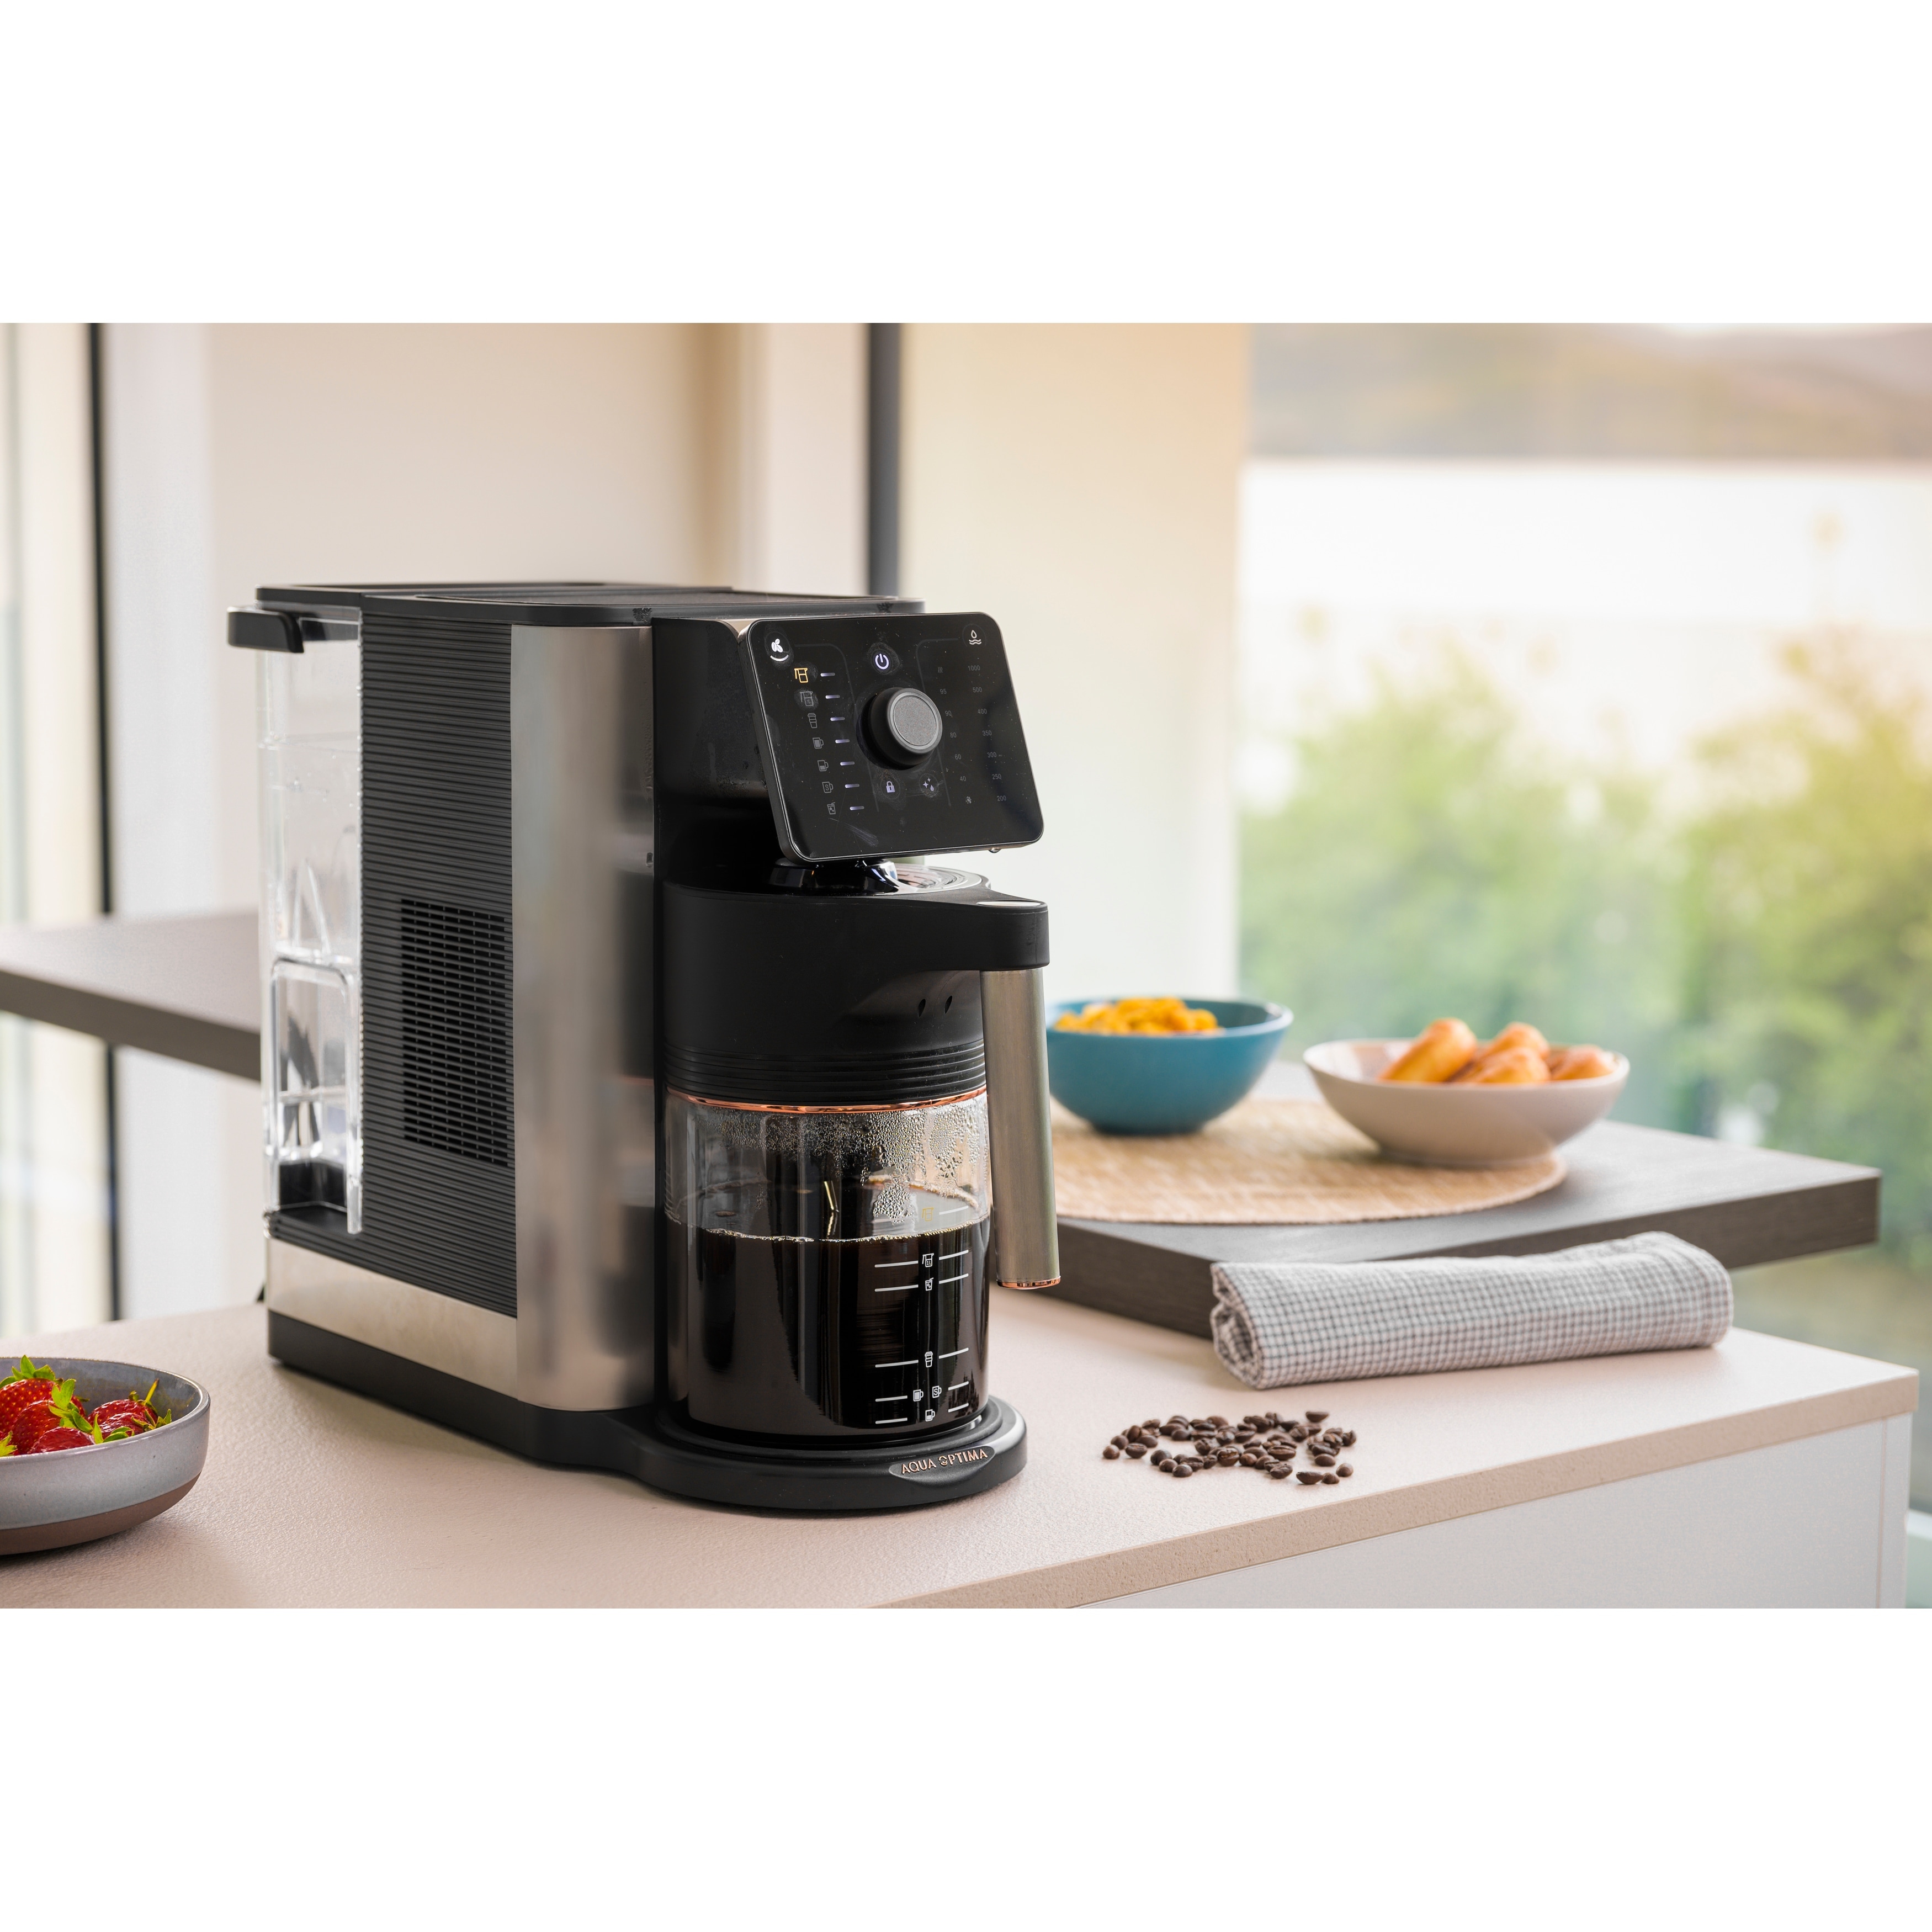 https://ak1.ostkcdn.com/images/products/is/images/direct/db38f78ccac484e51d31316410cbb766487e9db7/Aqua-Optima-Aurora-10-Cup-Drip-Coffee-Maker-%26-Coffee-Machine.jpg